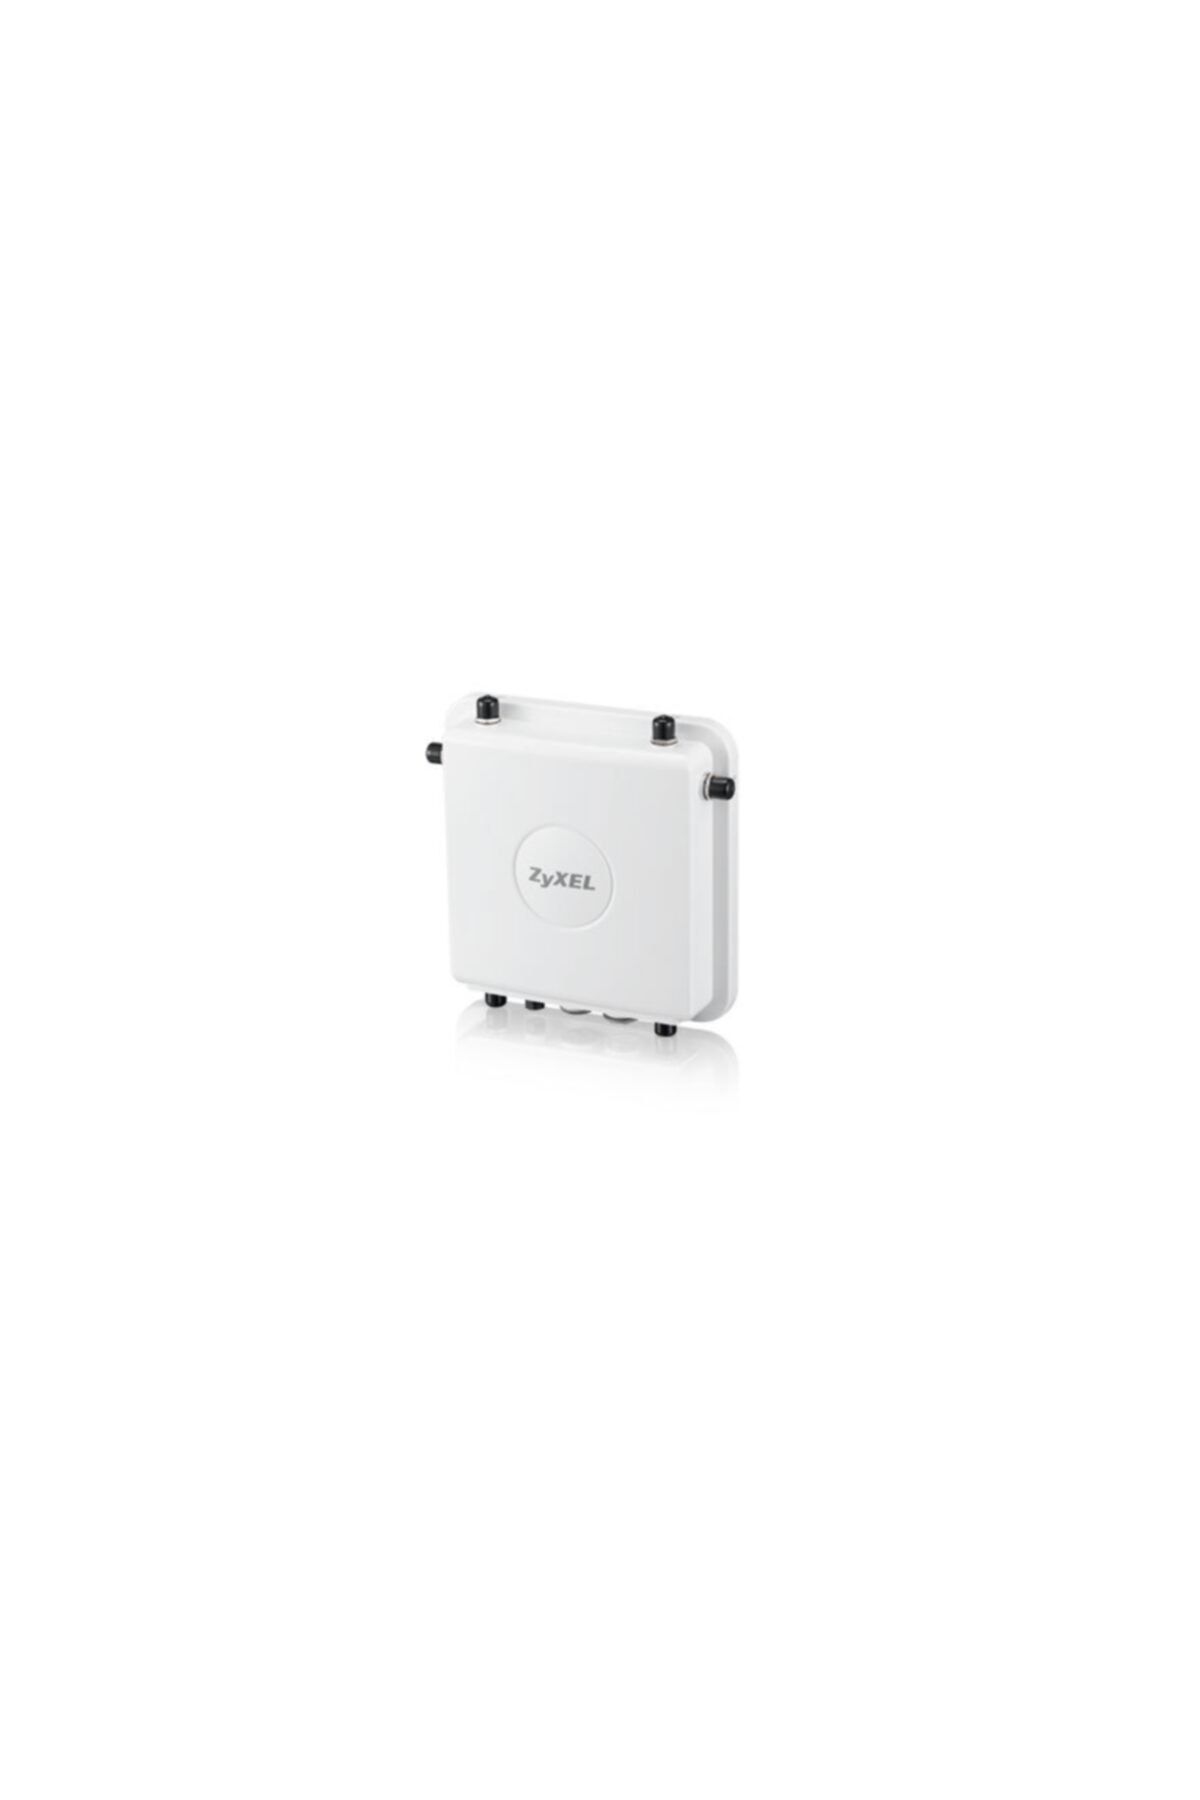 Zyxel Wac6553d-e 802.11ac Dual Radıo Smart Antenna Outdoor Access